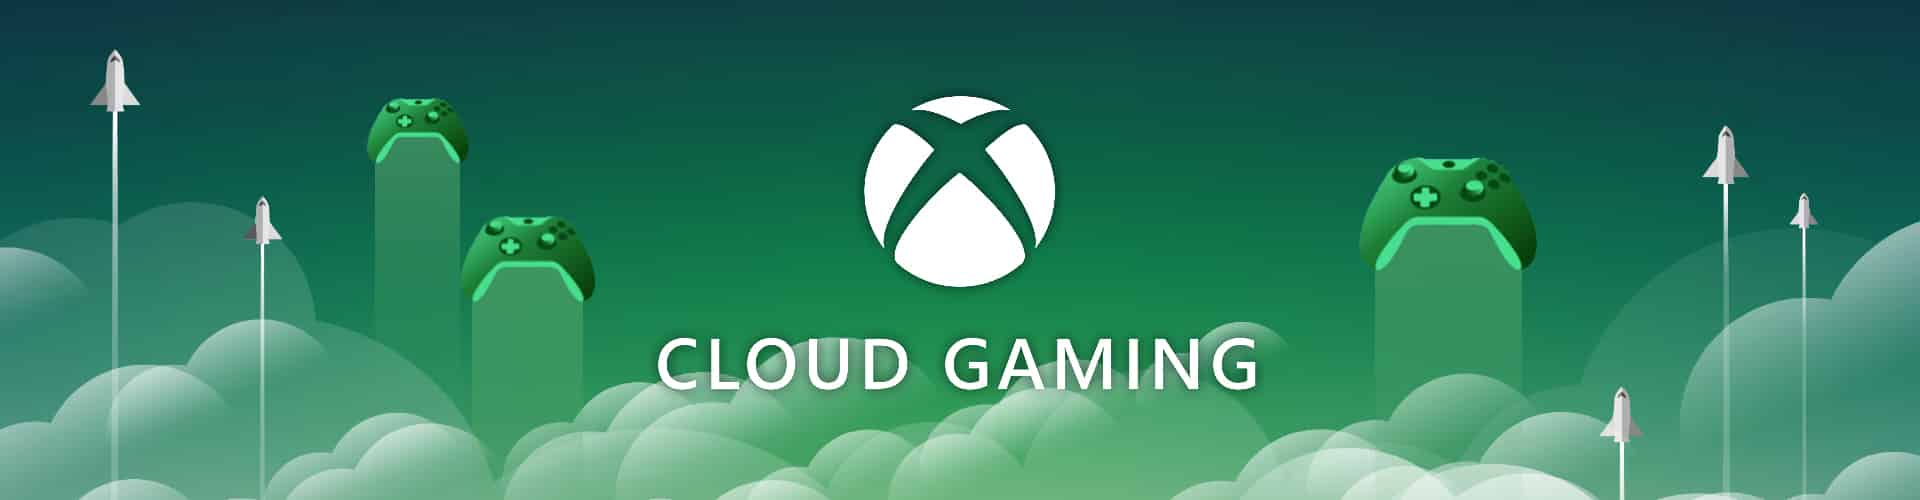 Xbox Cloud Gaming News